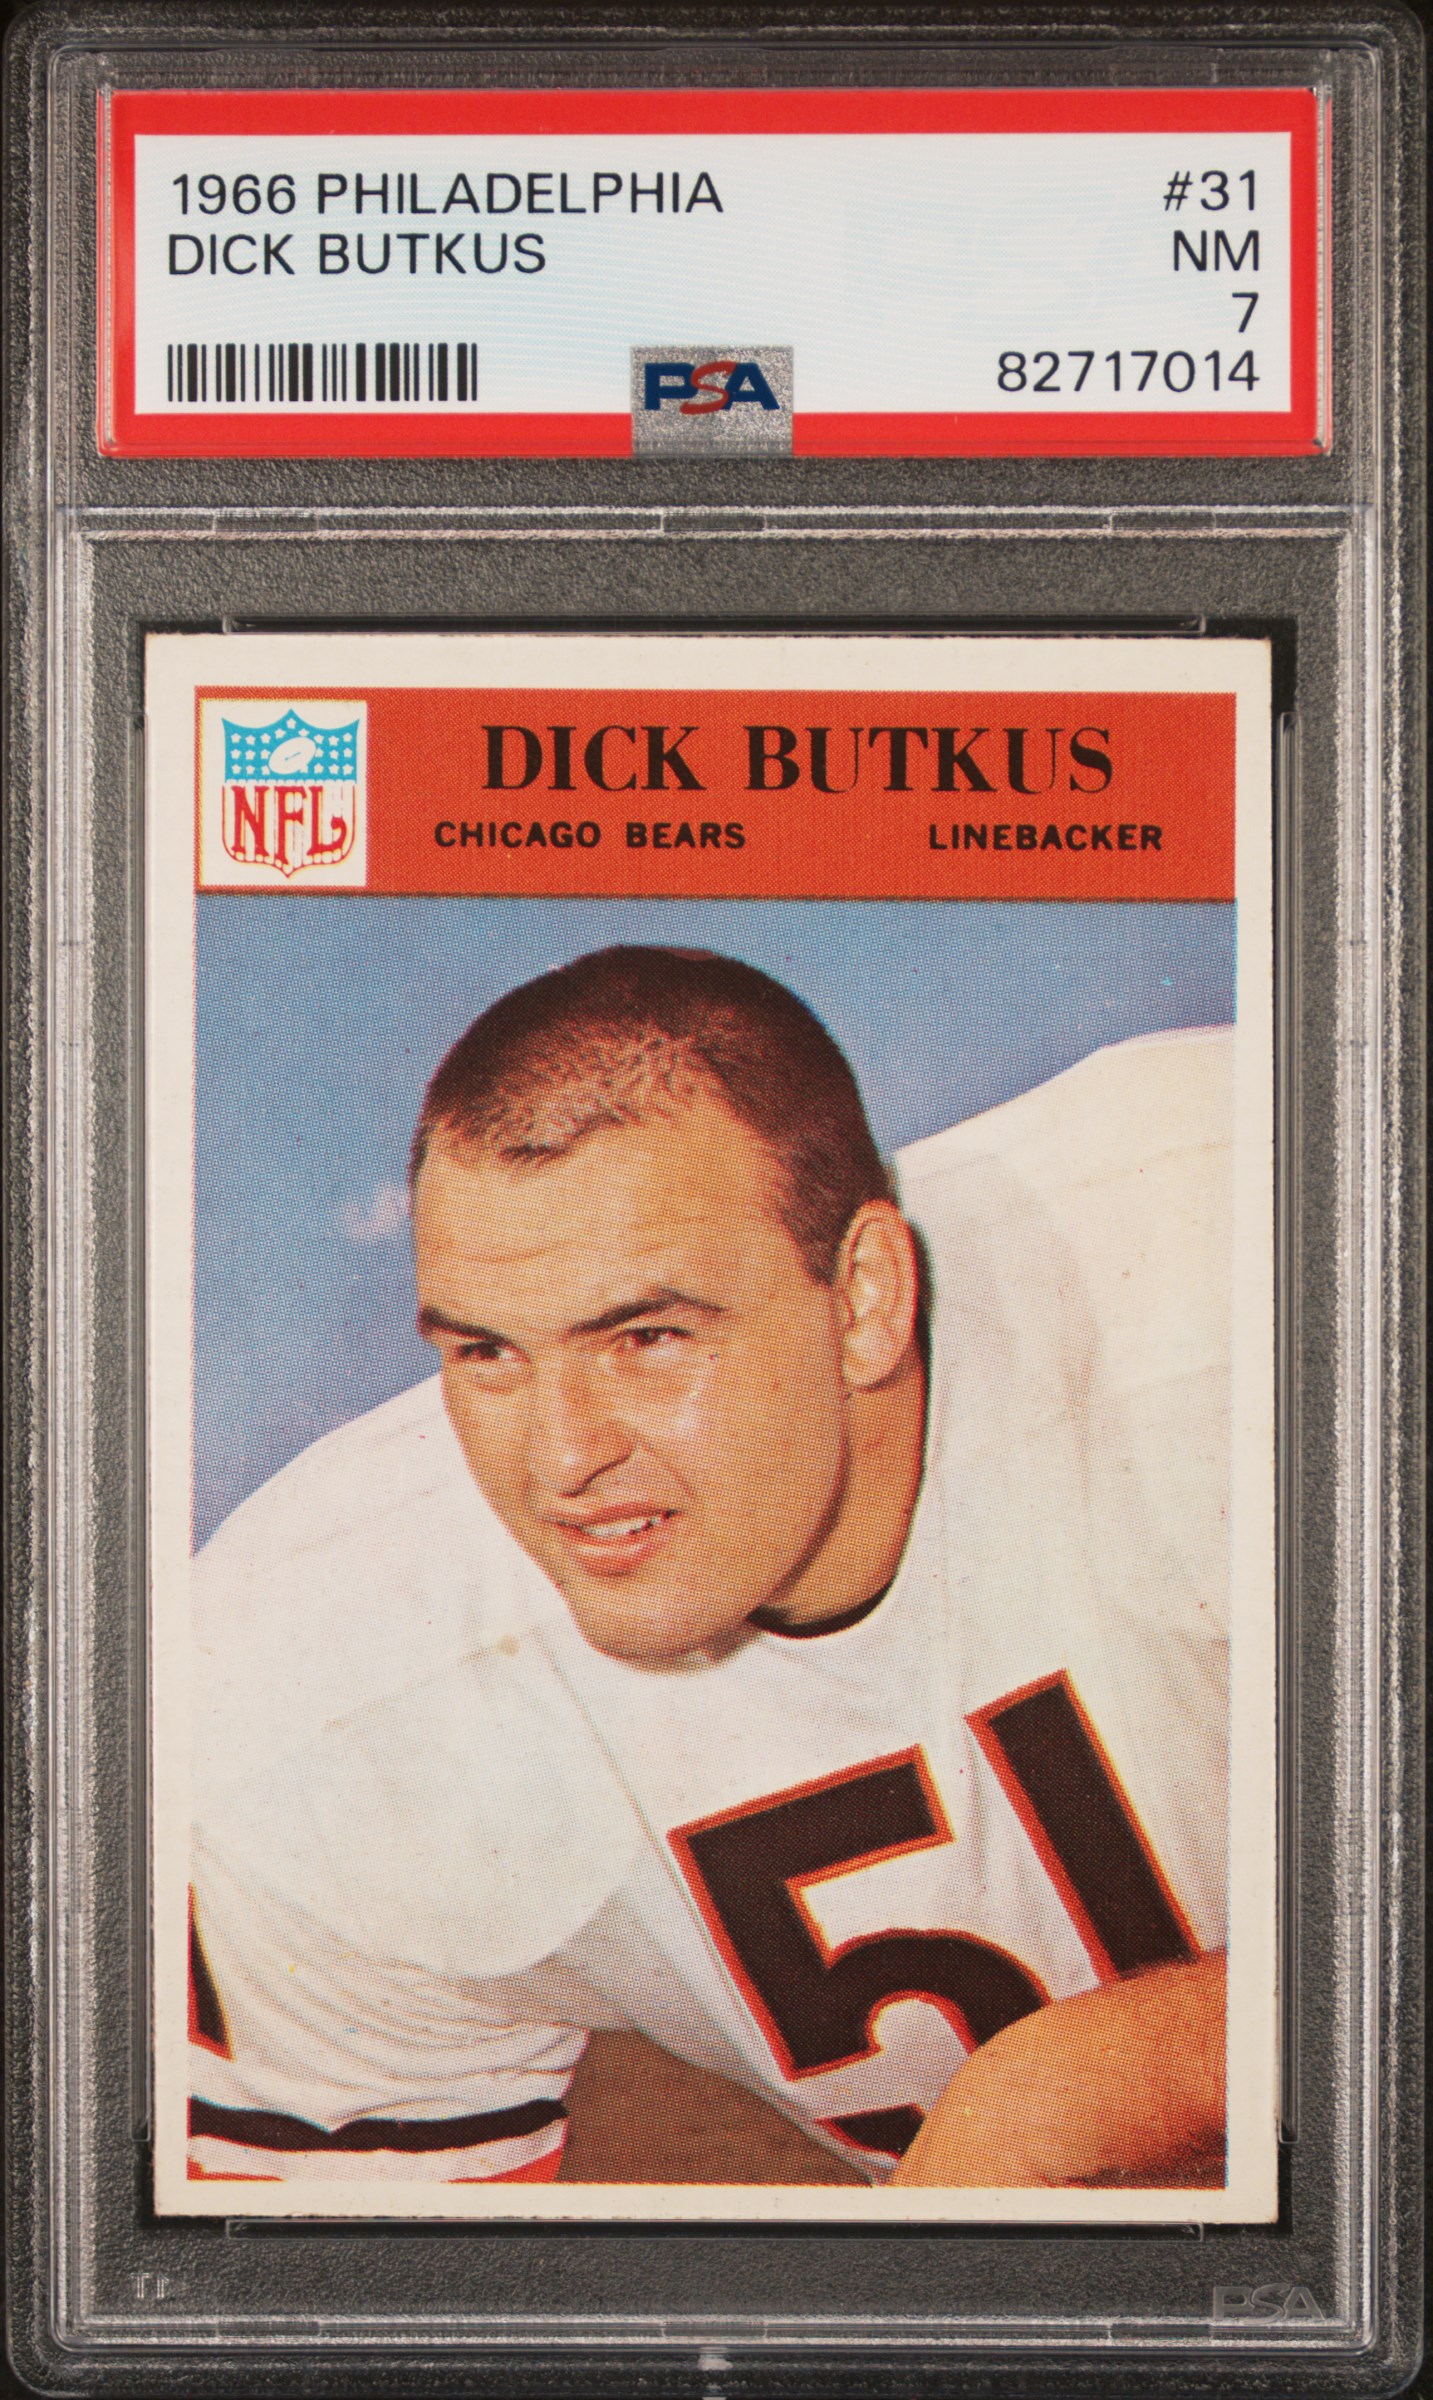 1966 Philadelphia #31 Dick Butkus Rookie Card – PSA NM 7